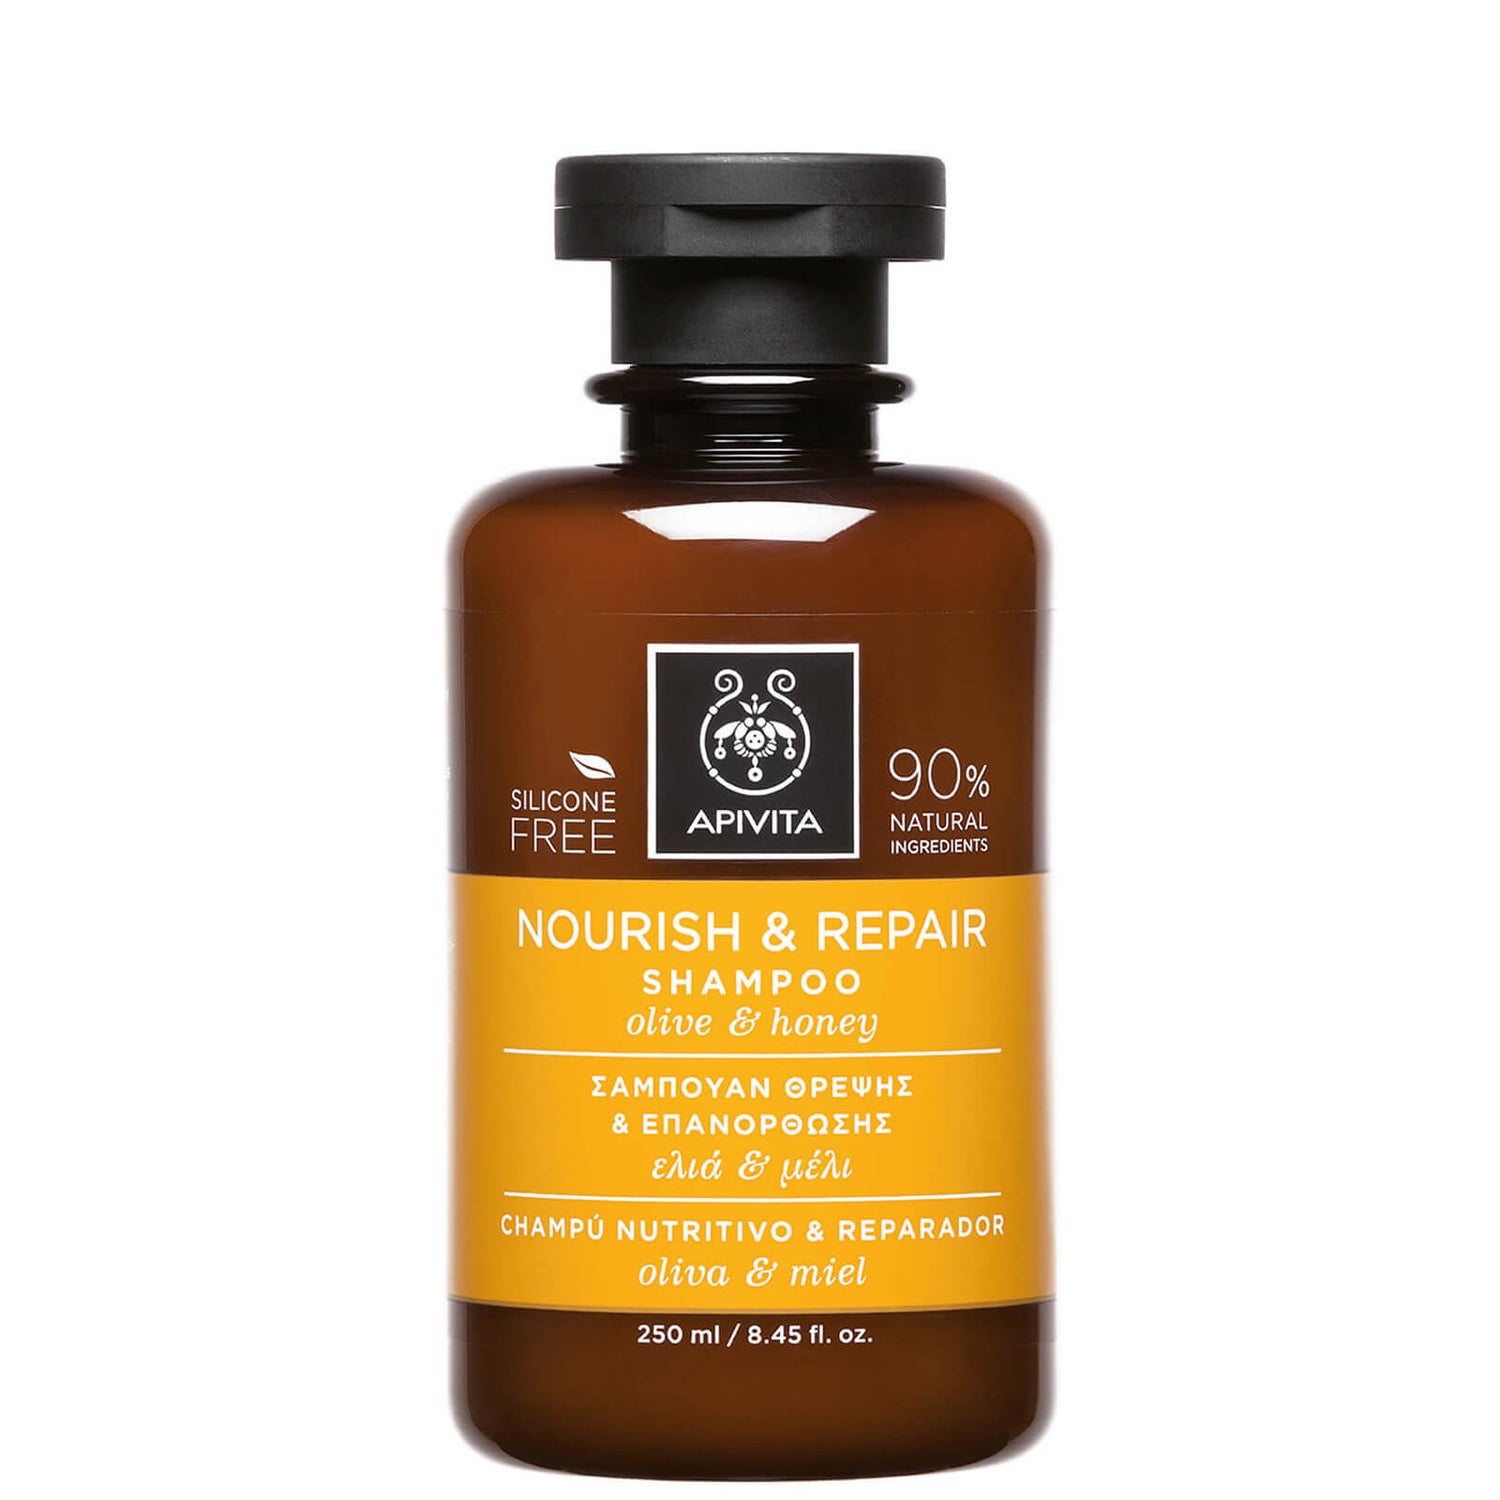 APIVITA Holistic Hair Care Nourish & Repair Shampoo - Olive & Honey(아피비타 홀리스틱 헤어 케어 너리시 앤 리페어 샴푸 - 올리브 앤 허니 250ml)